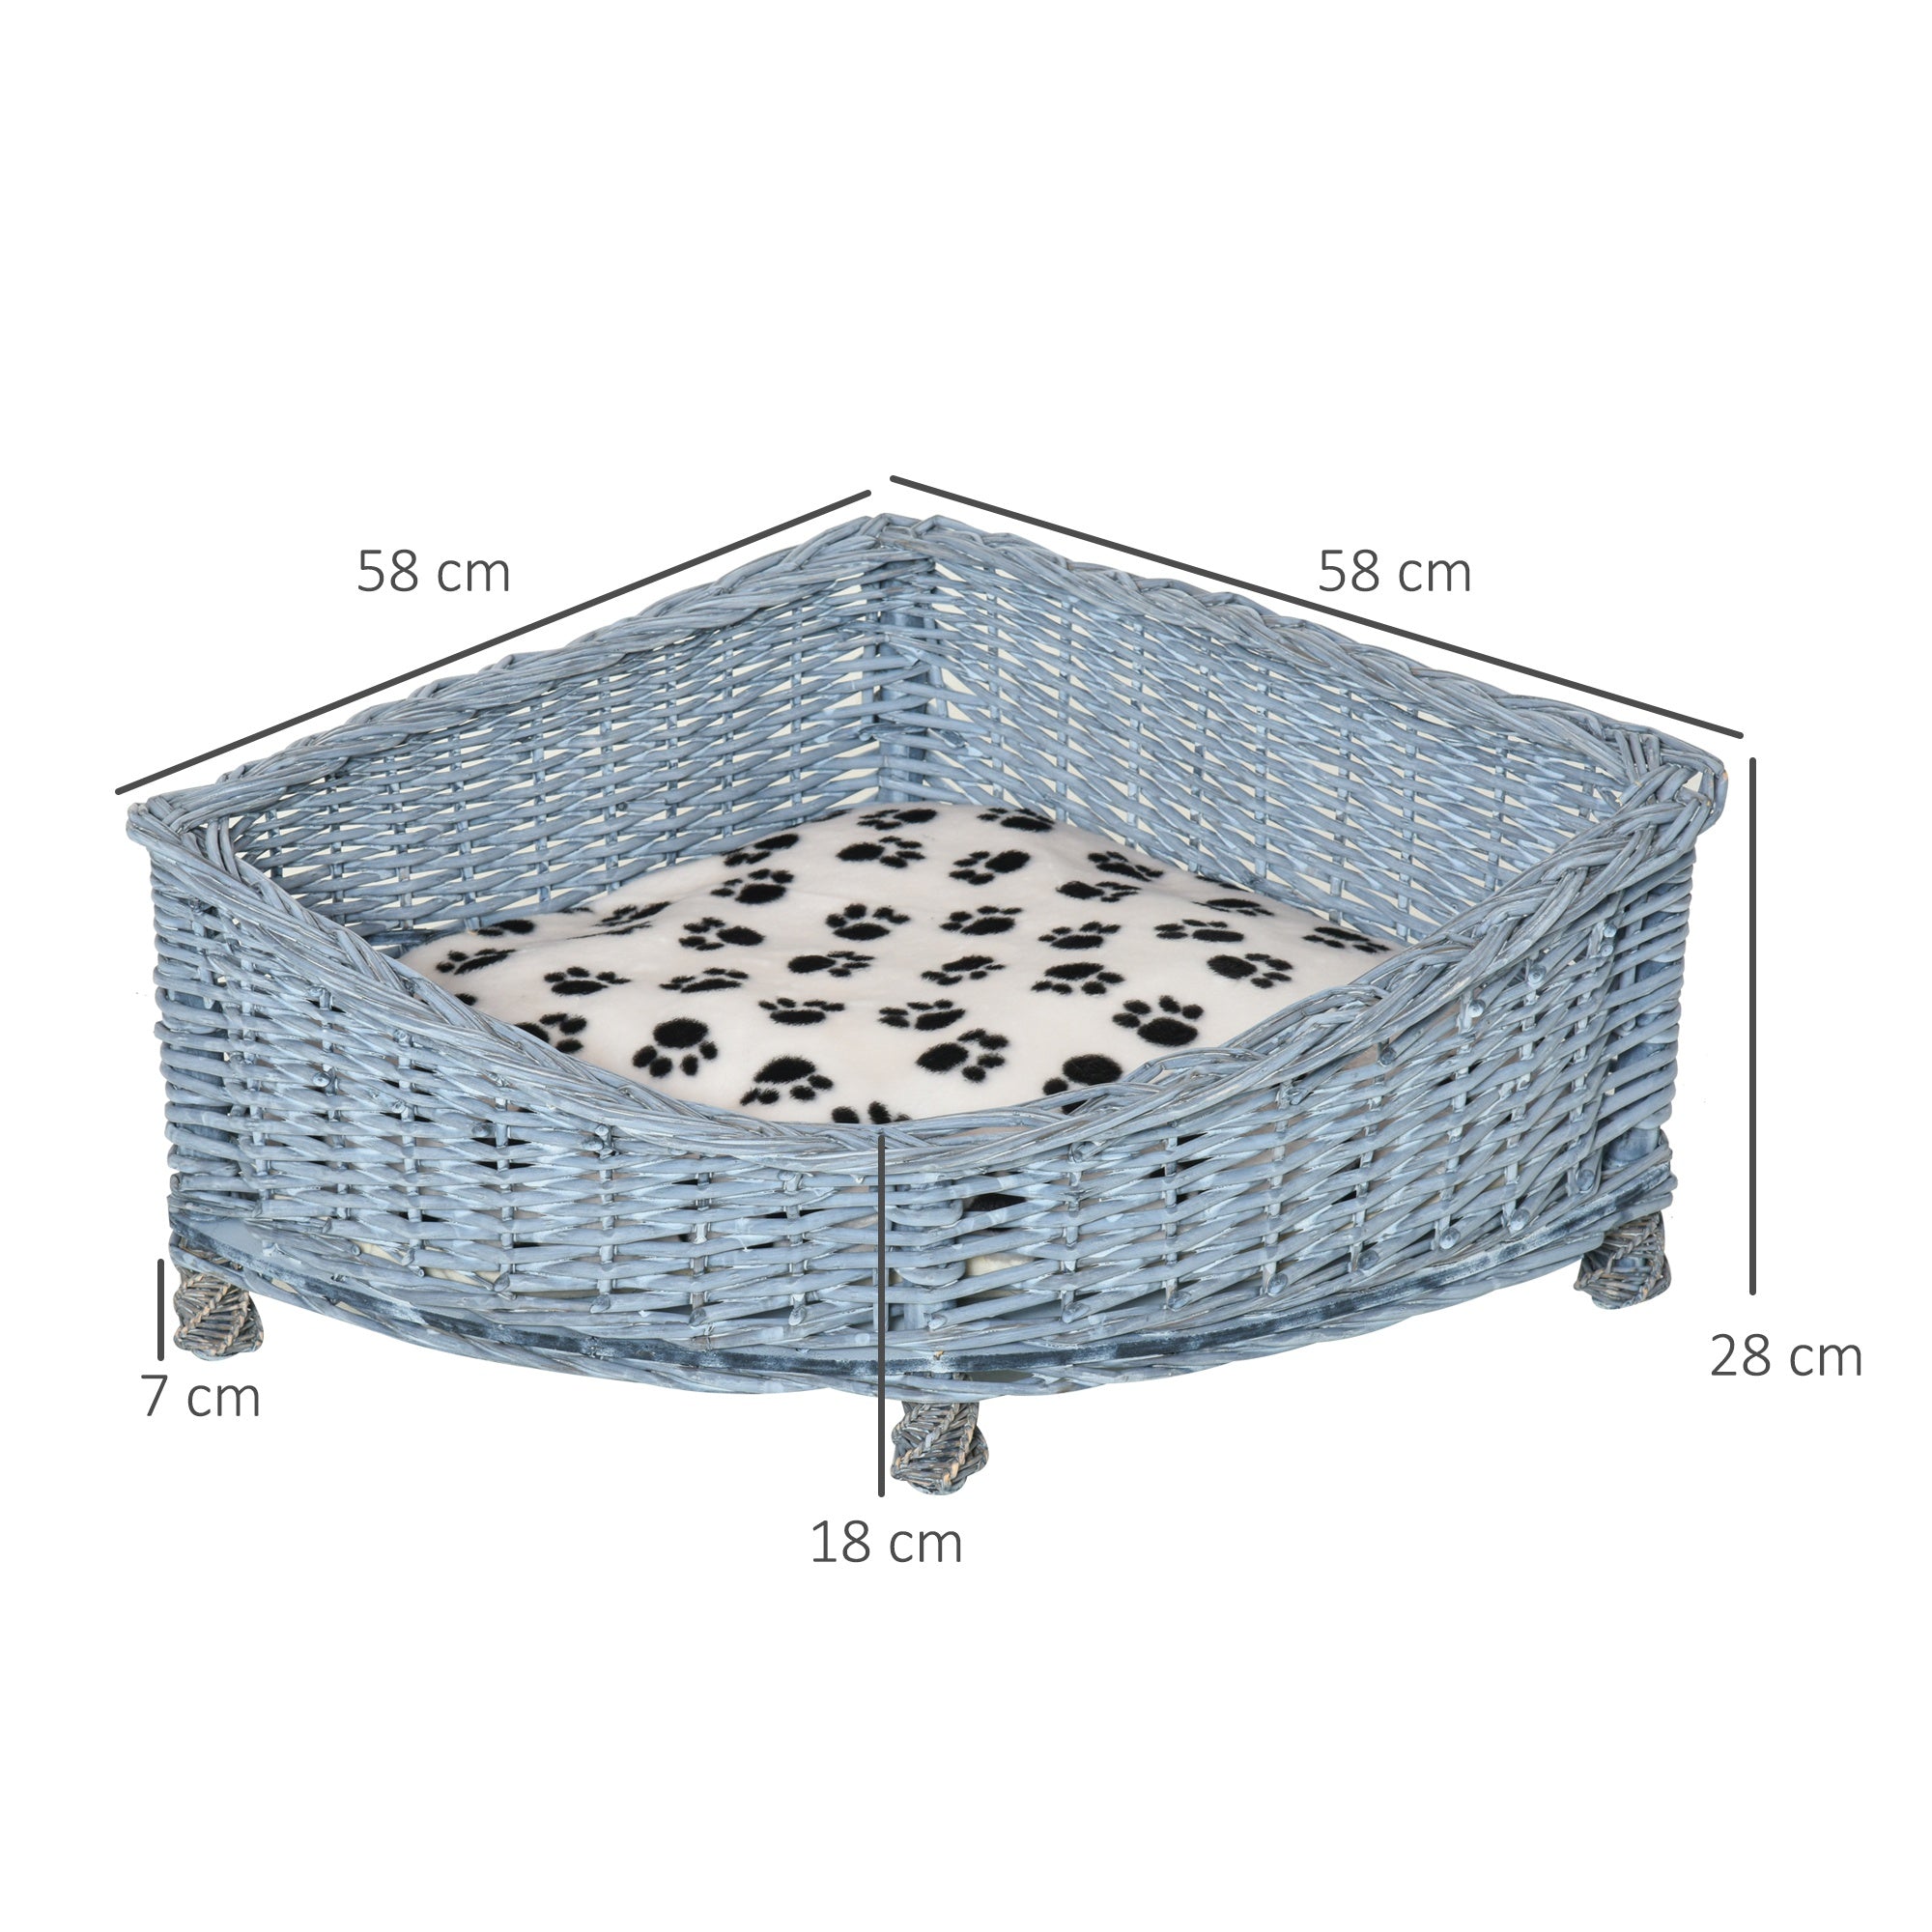 Wicker Dog Corner Basket Pet Bed Sofa Couch w/ Soft Plush Cushion Elevated Base